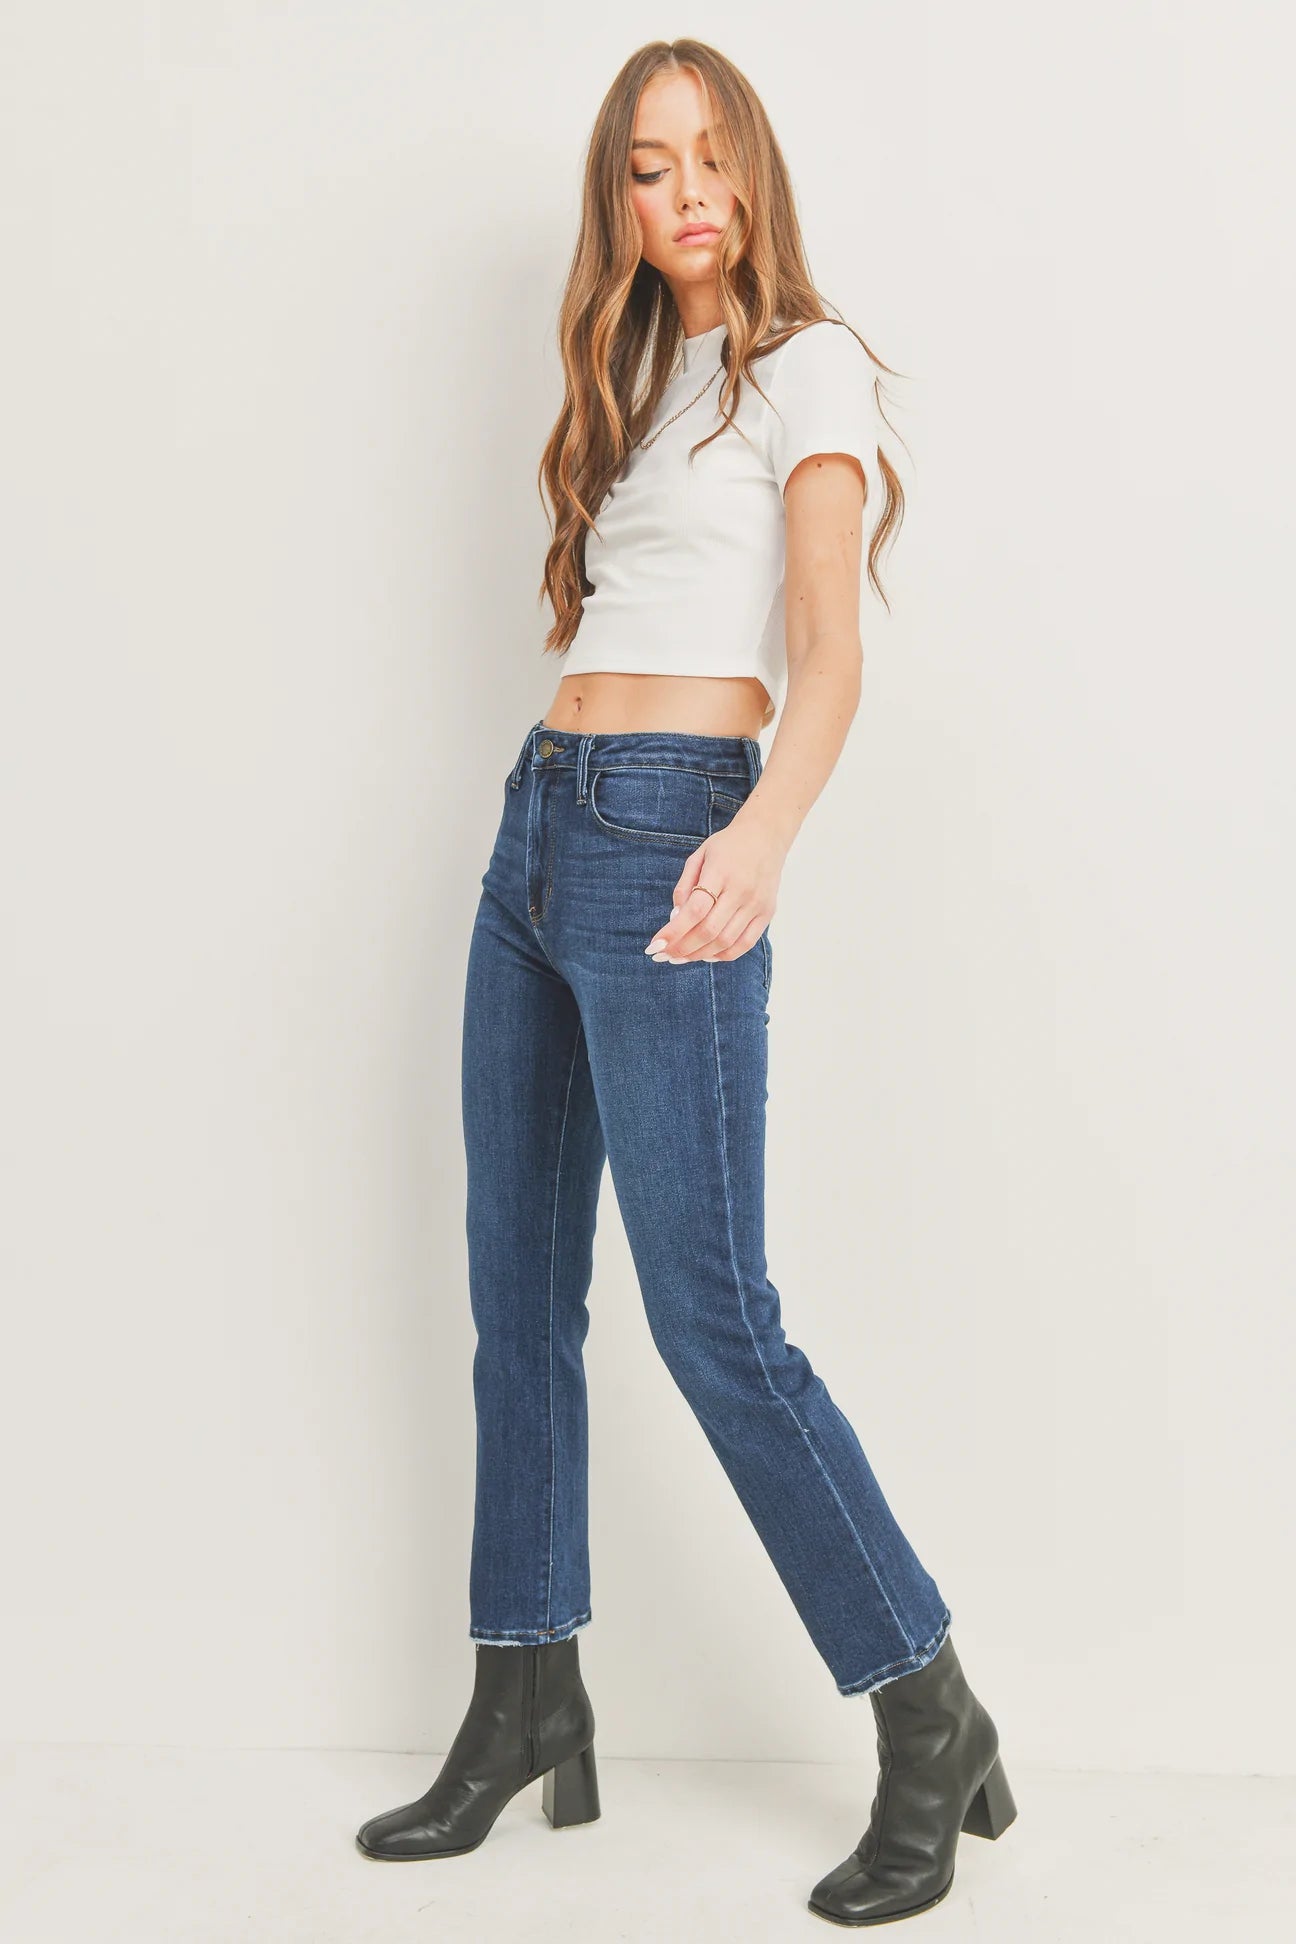 Jeans & Trousers | Denim Co. Narrow Fit Women's Jeans | Freeup